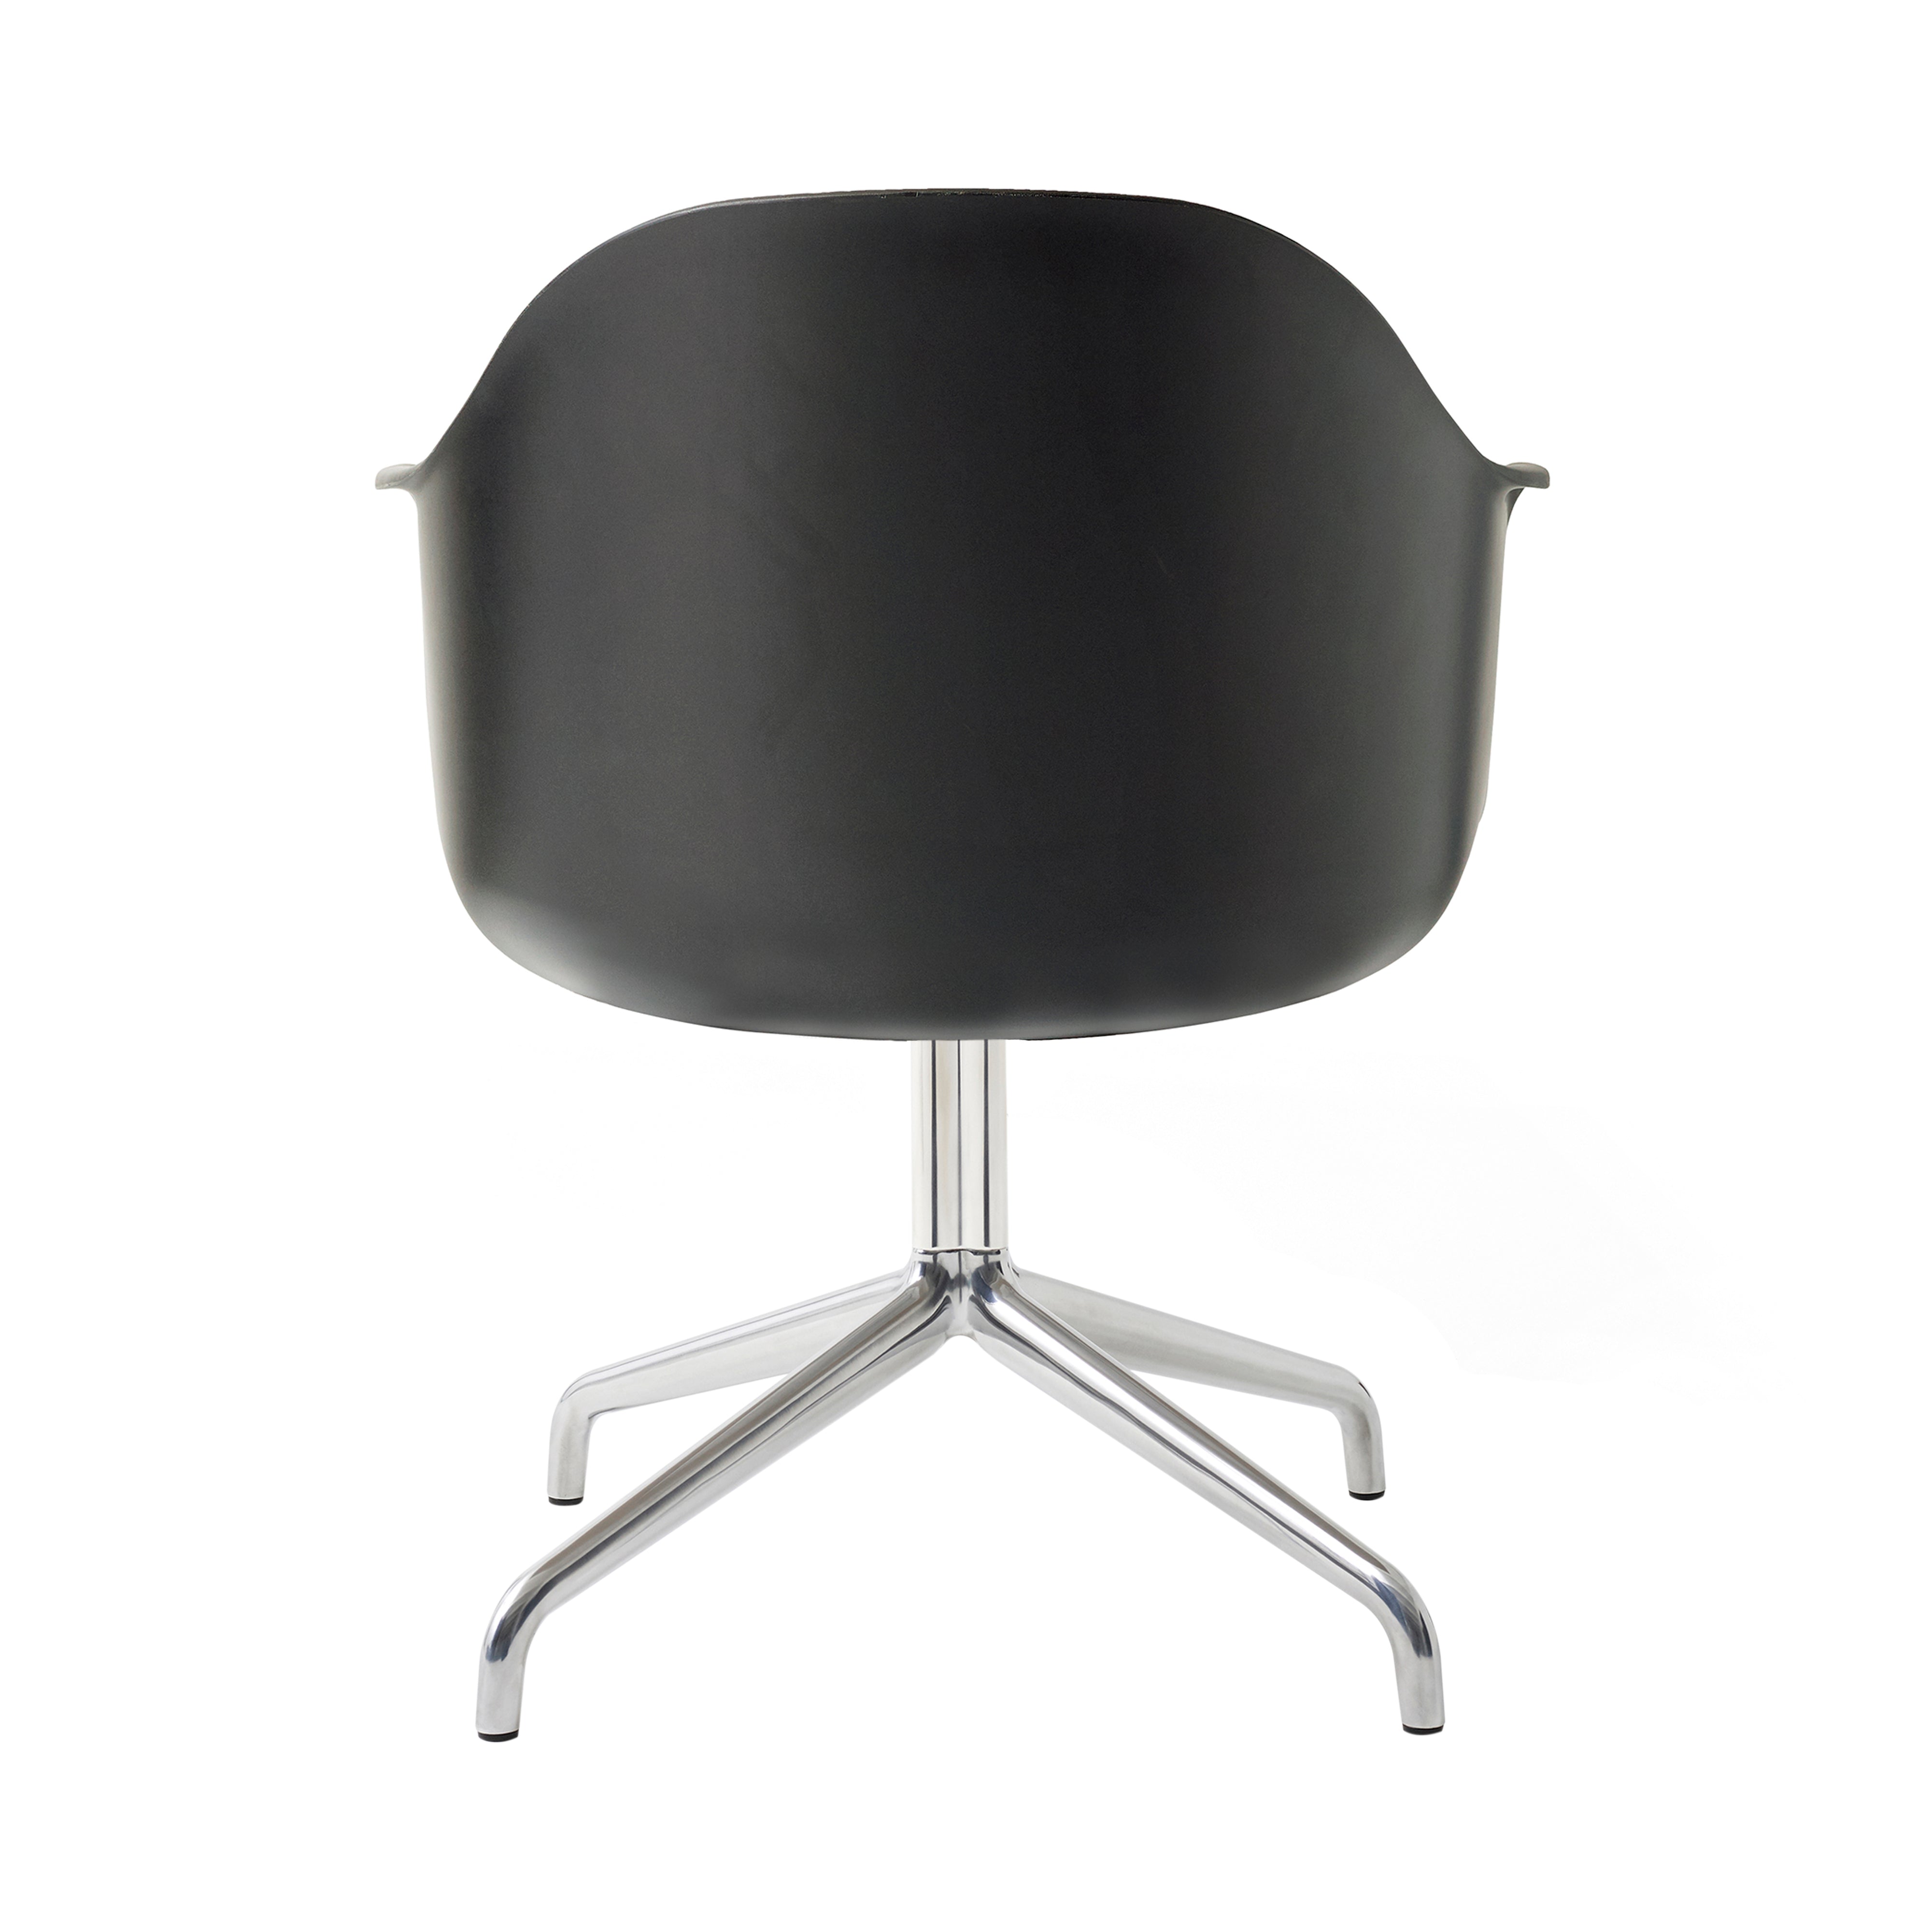 Harbour Dining Chair: Star Base + Return + Polished Aluminum + Black